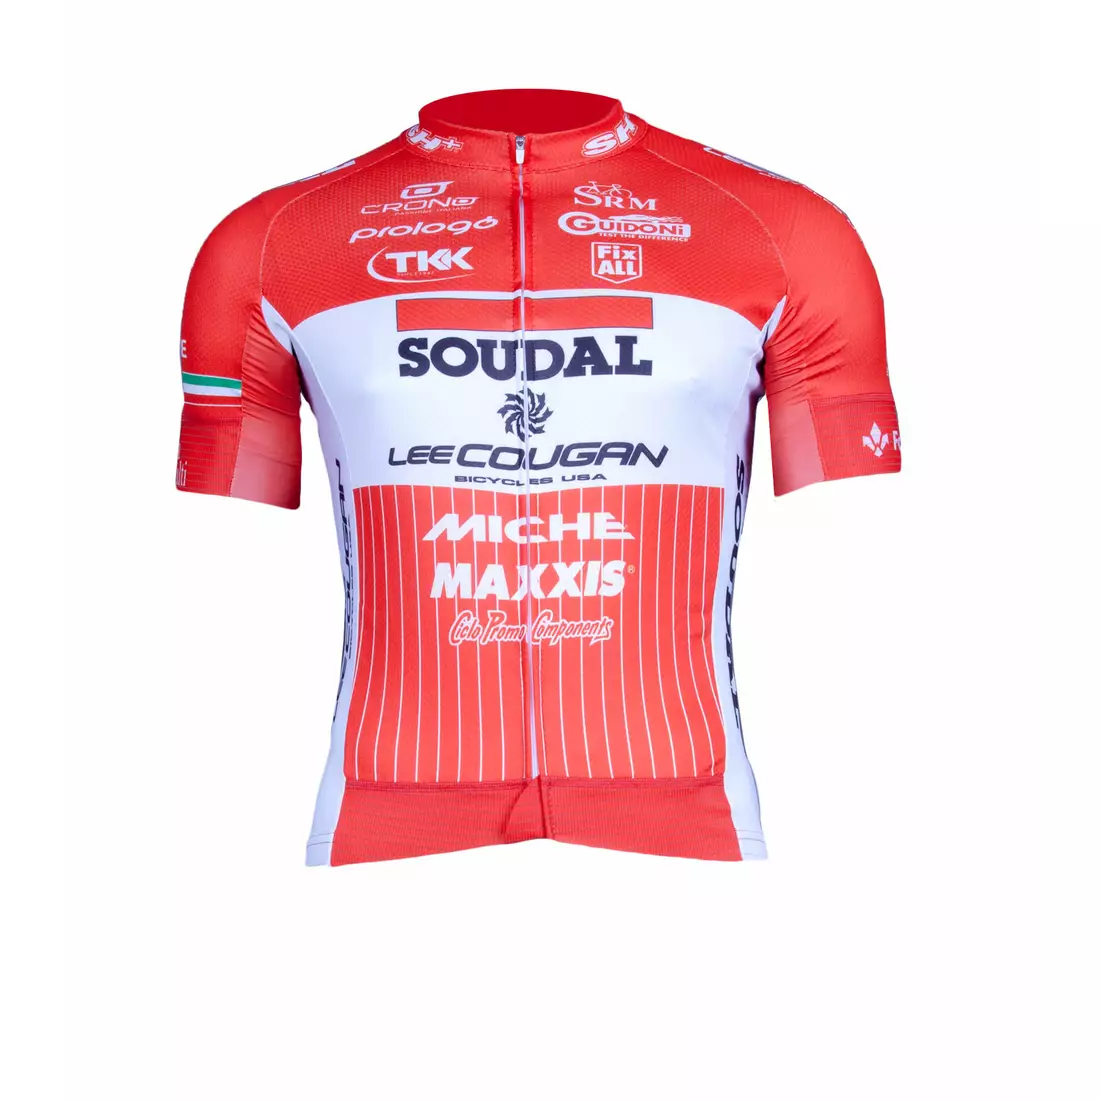 BIEMME SOUDAL-LEE COUGAN Racing Team 2017 - férfi kerékpáros mez